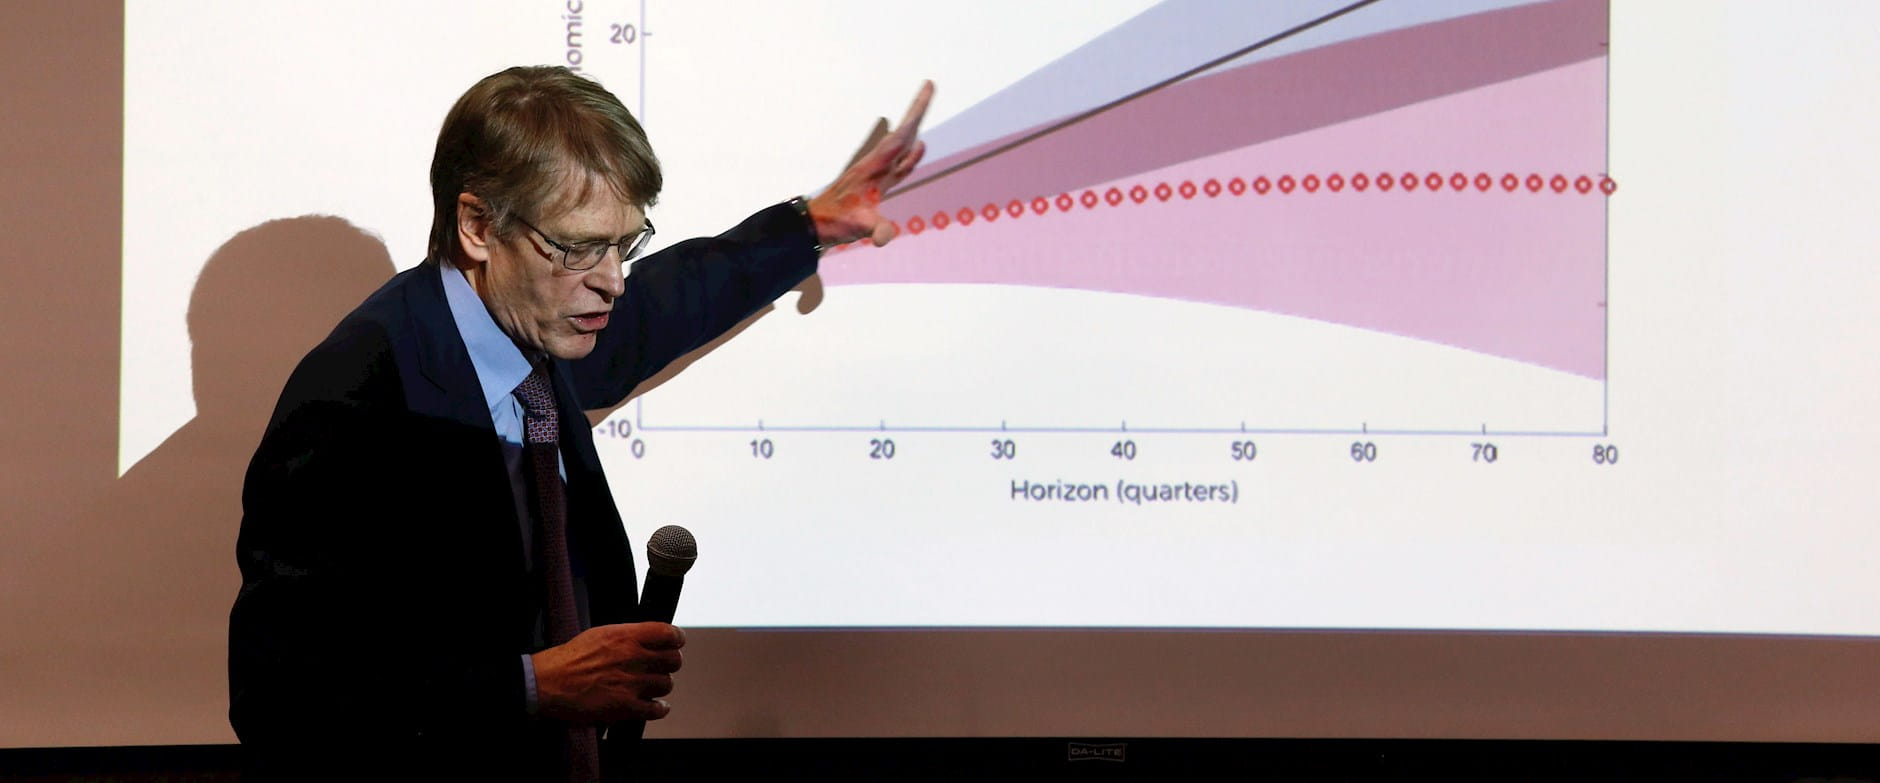 Lars Peter Hansen presents a graph on a projector screen